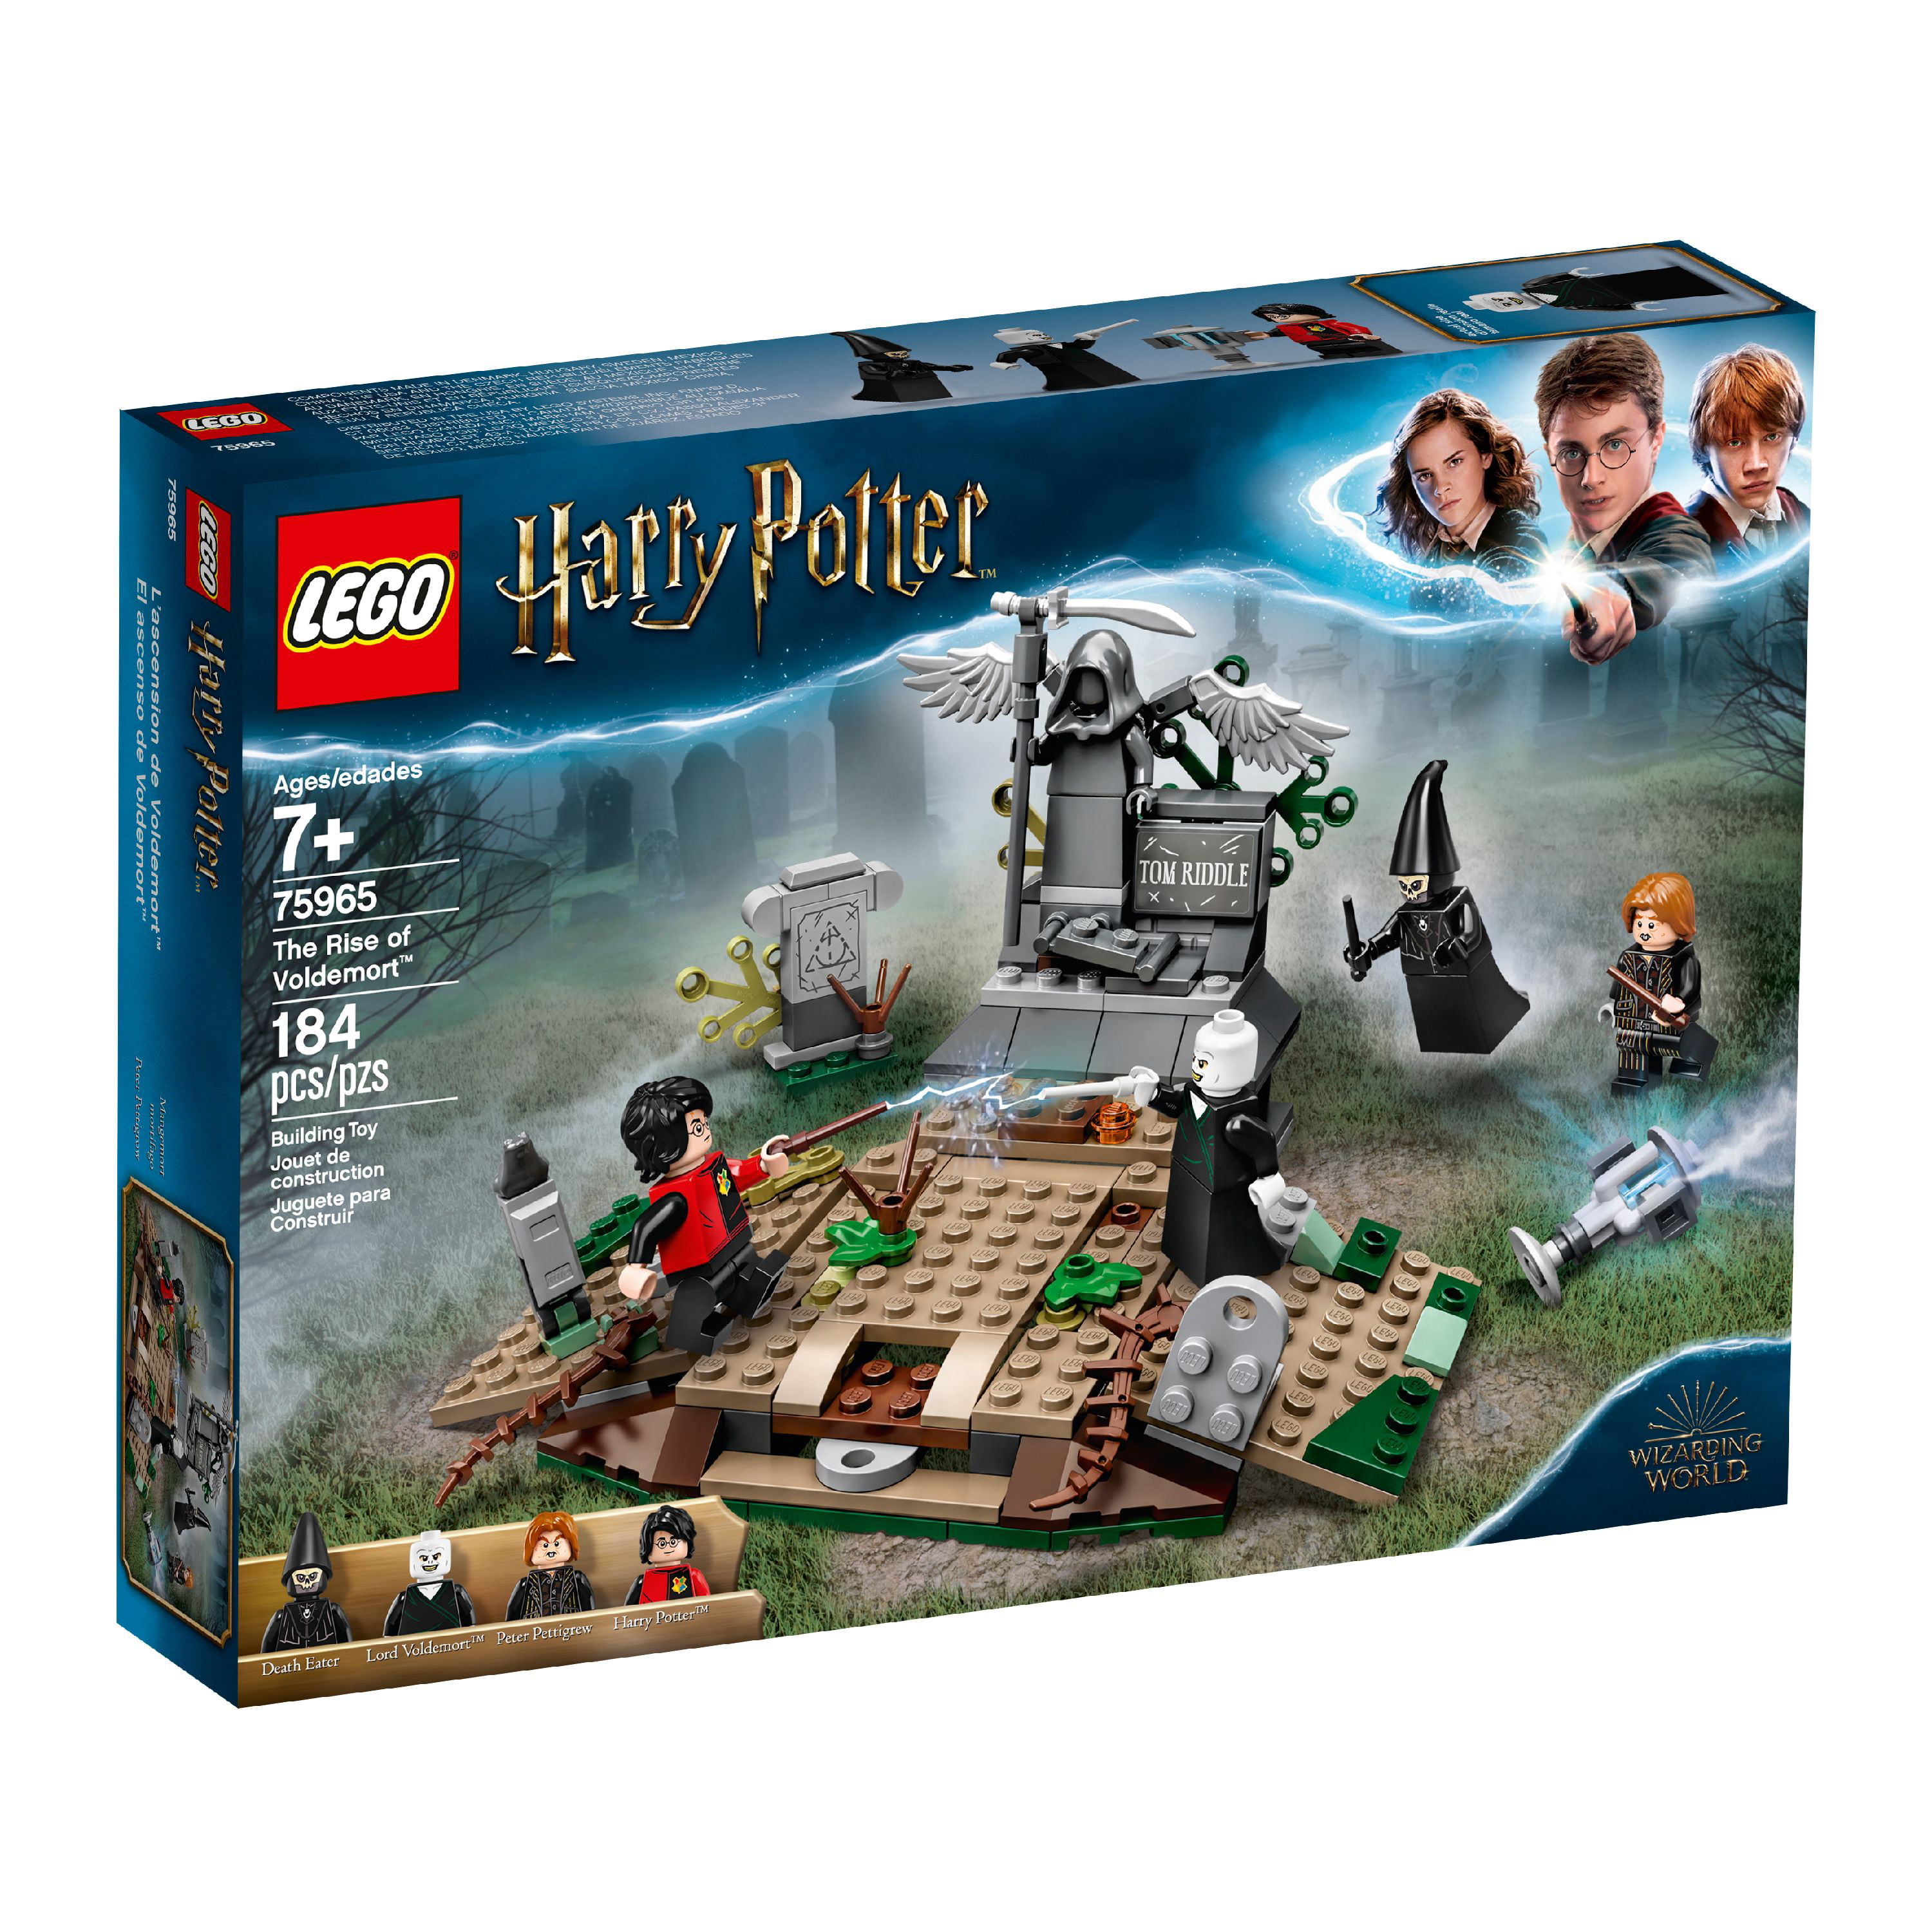 LEGO Harry Potter Rise of Voldemort 75965 Wizard Battle Action Set (184 Pieces) Walmart.com